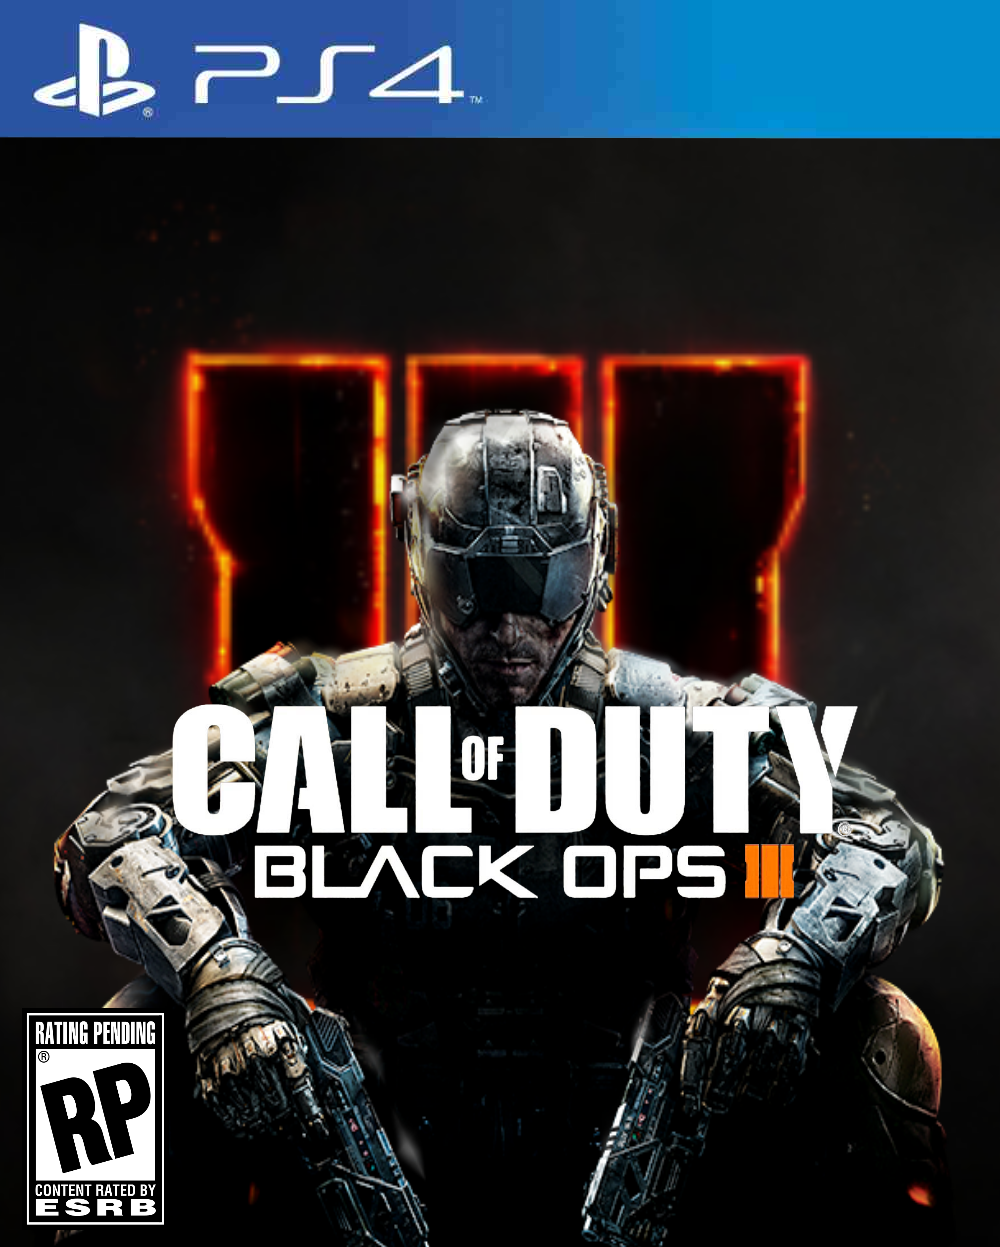 Калл оф дьюти опс 3. Call of Duty: Black ops III ps4. Call of Duty Black ops 3 ps4. Cod Black ops 3 ps3 обложка. Black ops 4 обложка.